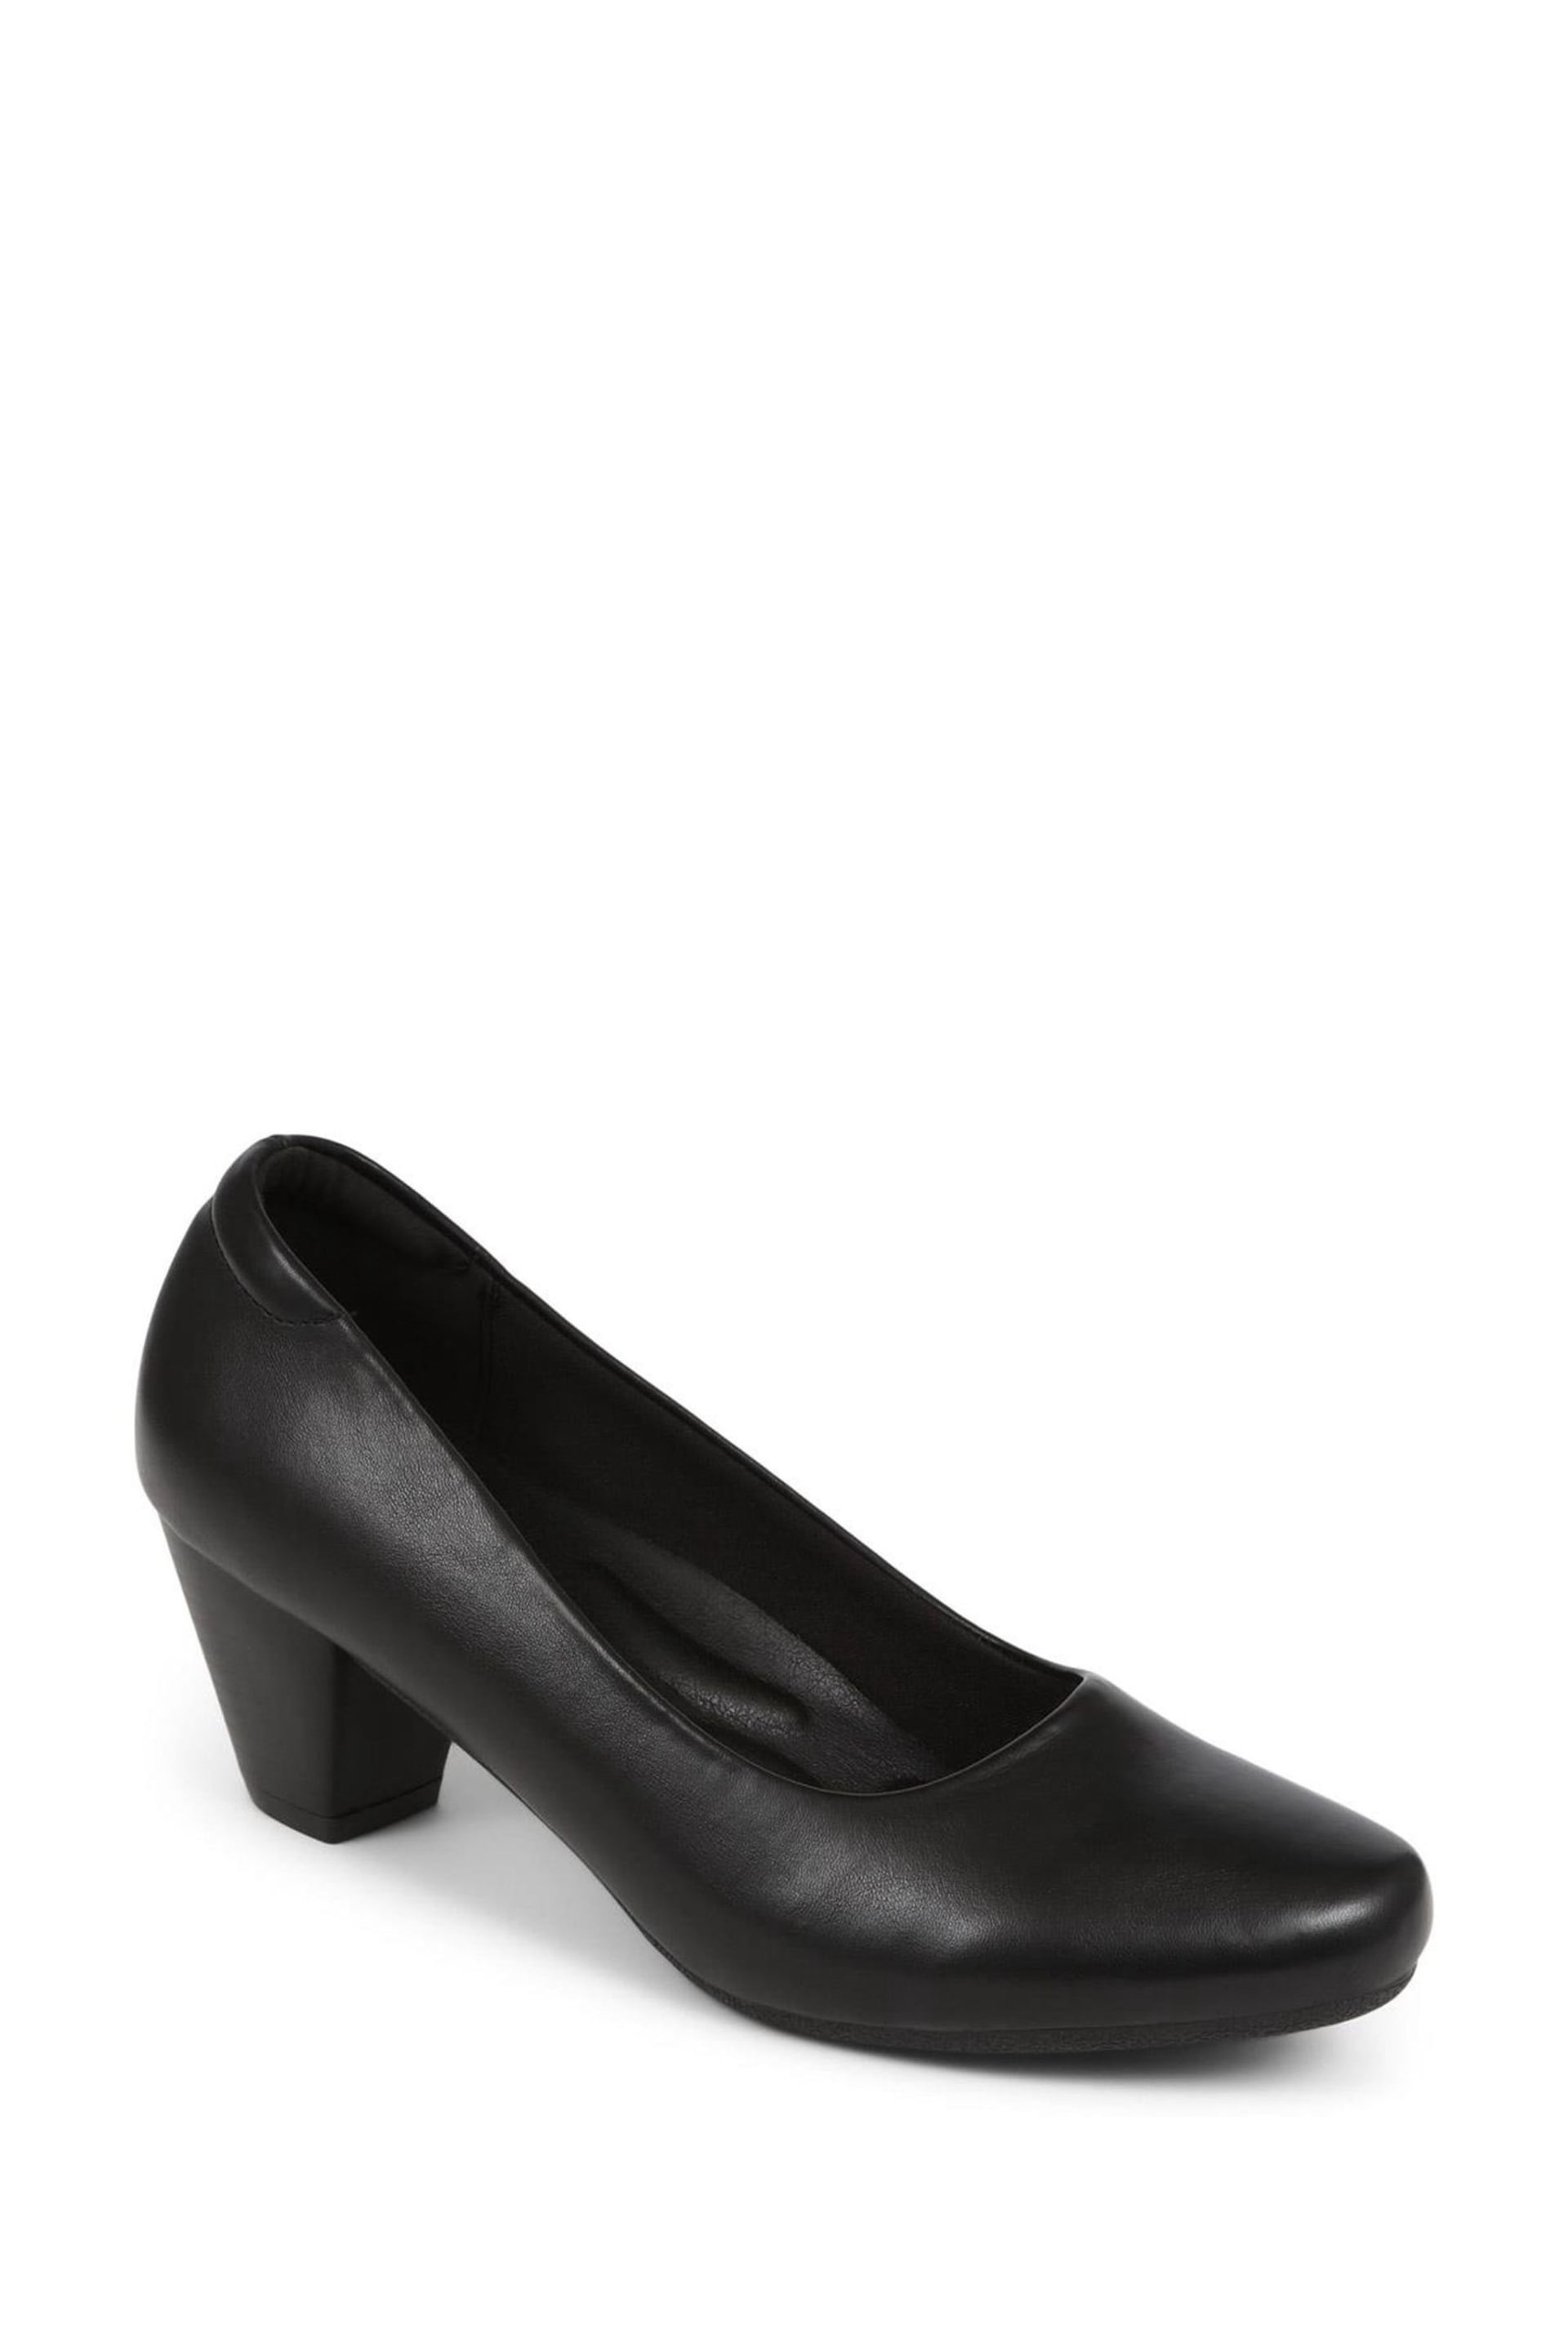 Pavers Heeled Court Black Shoes - Image 2 of 5